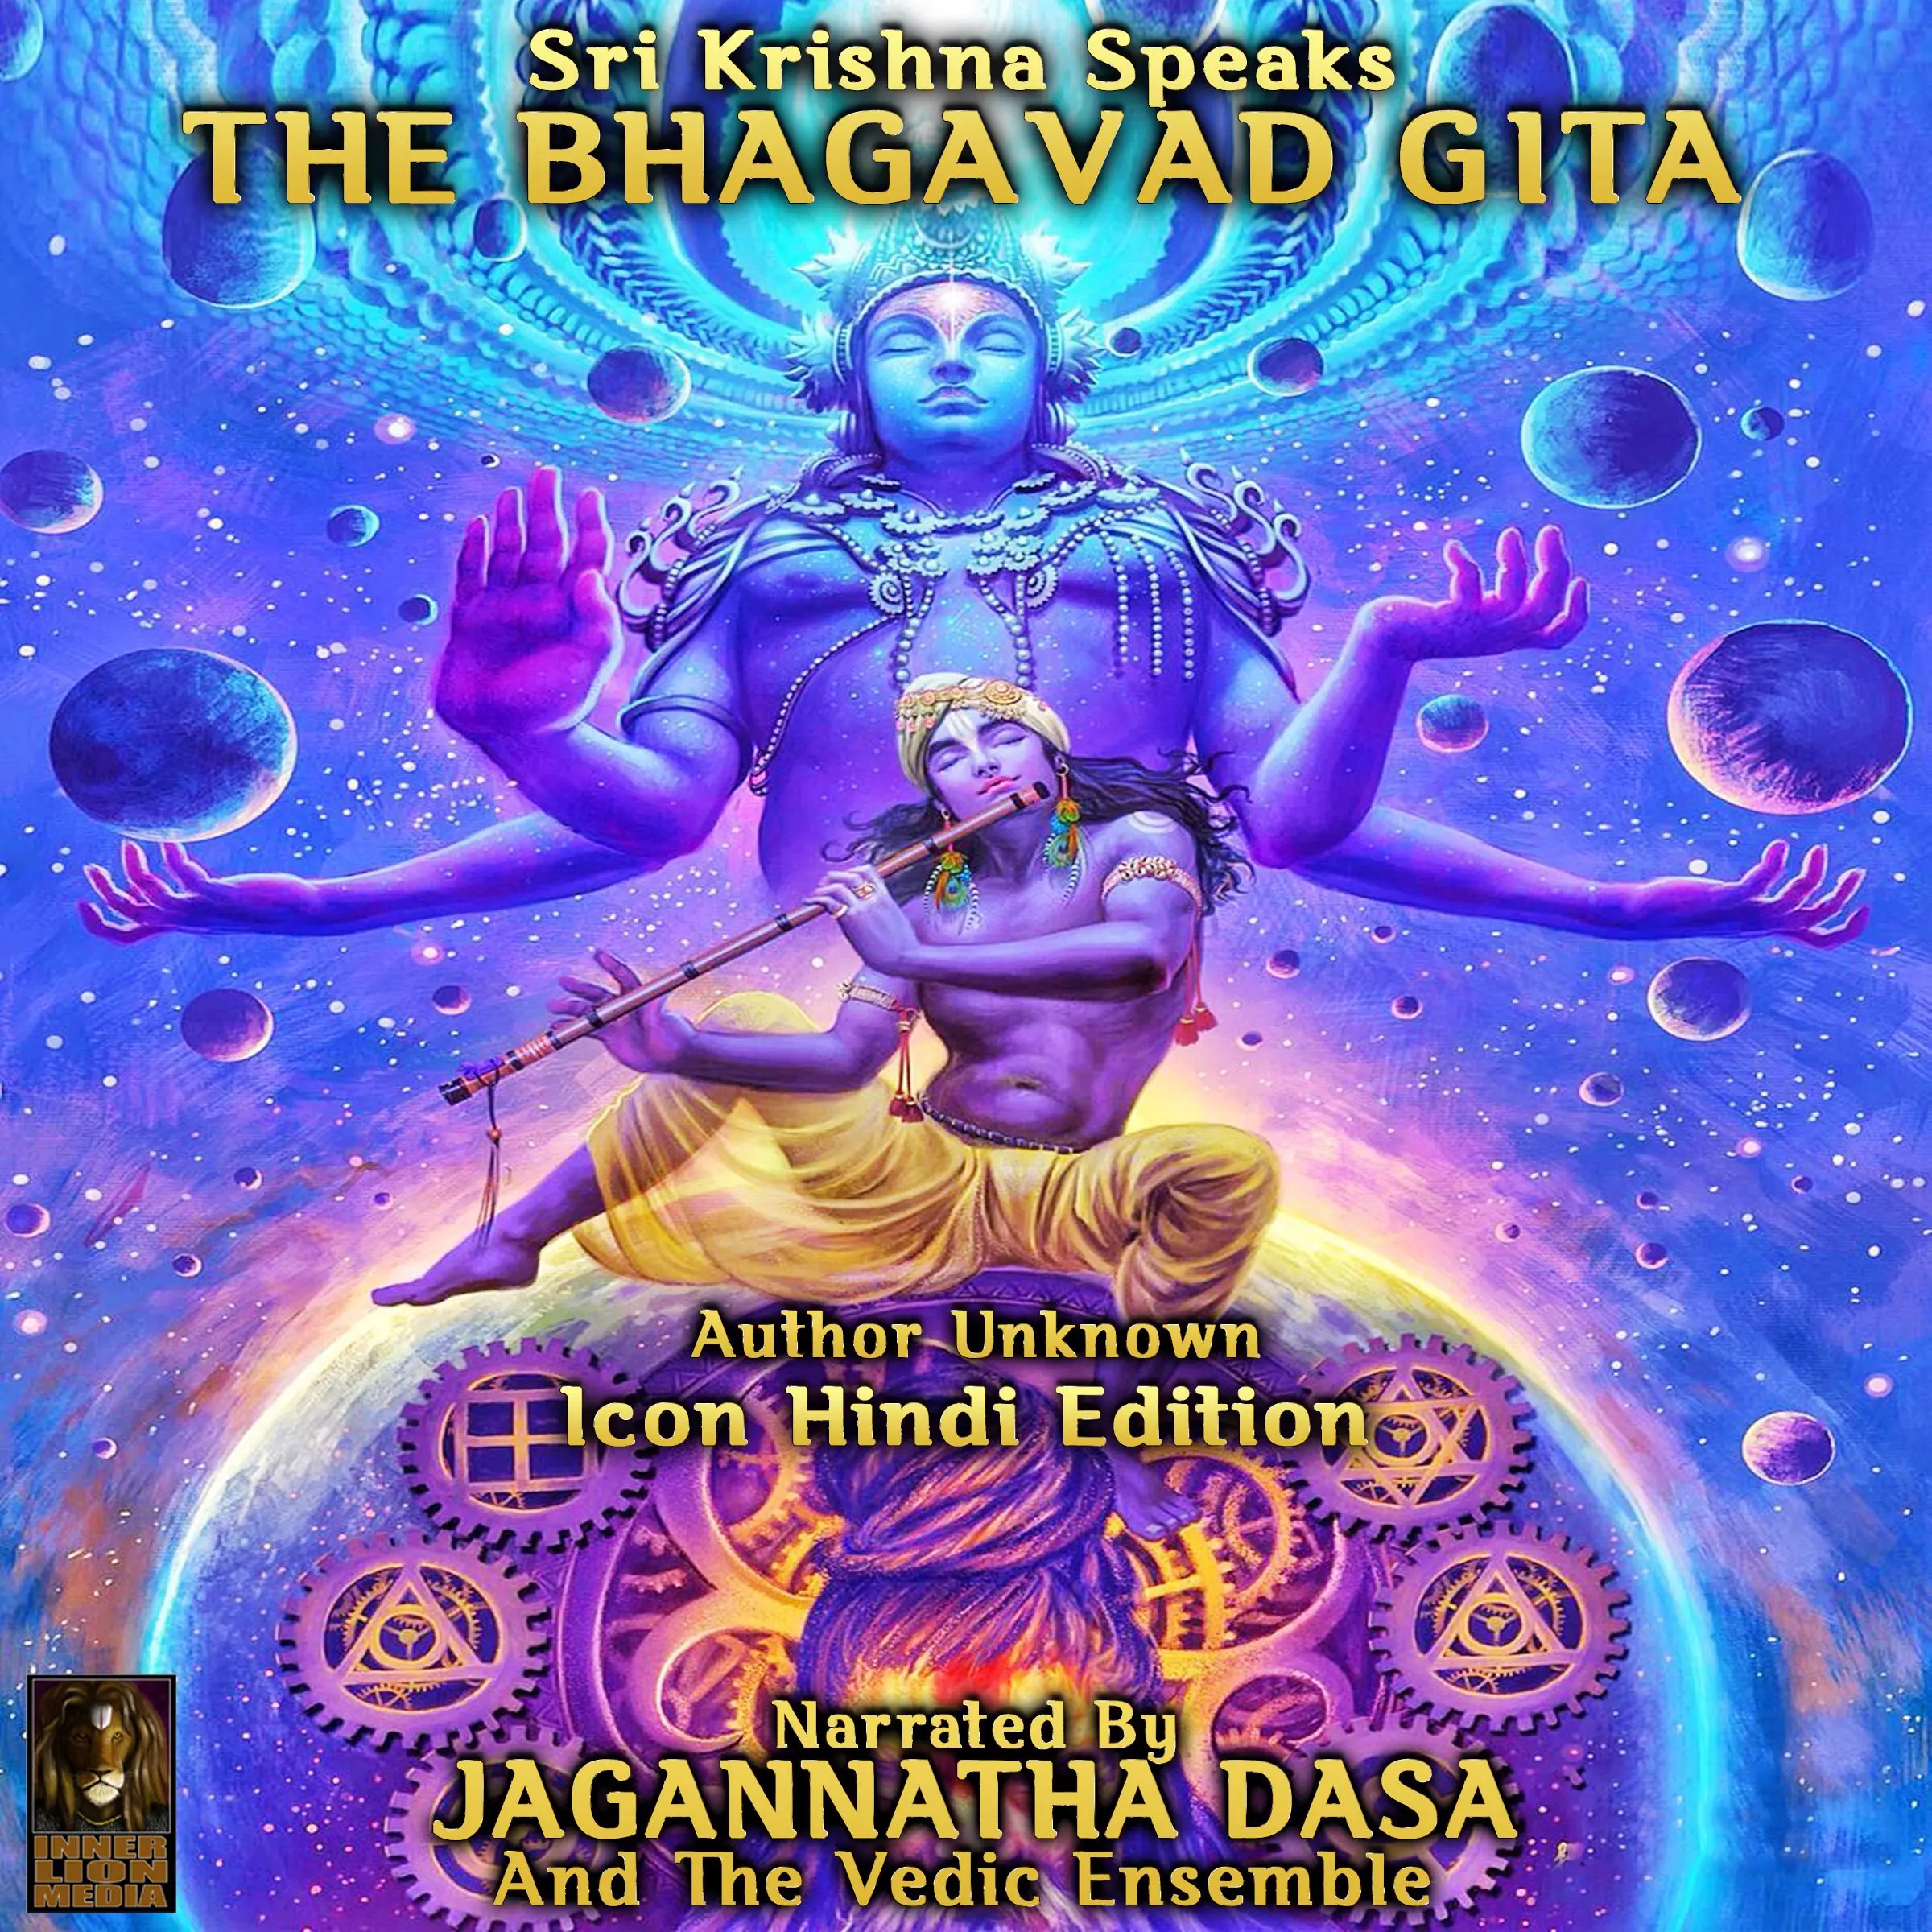 Sri Krishna Speaks The Bhagavad Gita Audiobook by Unknown